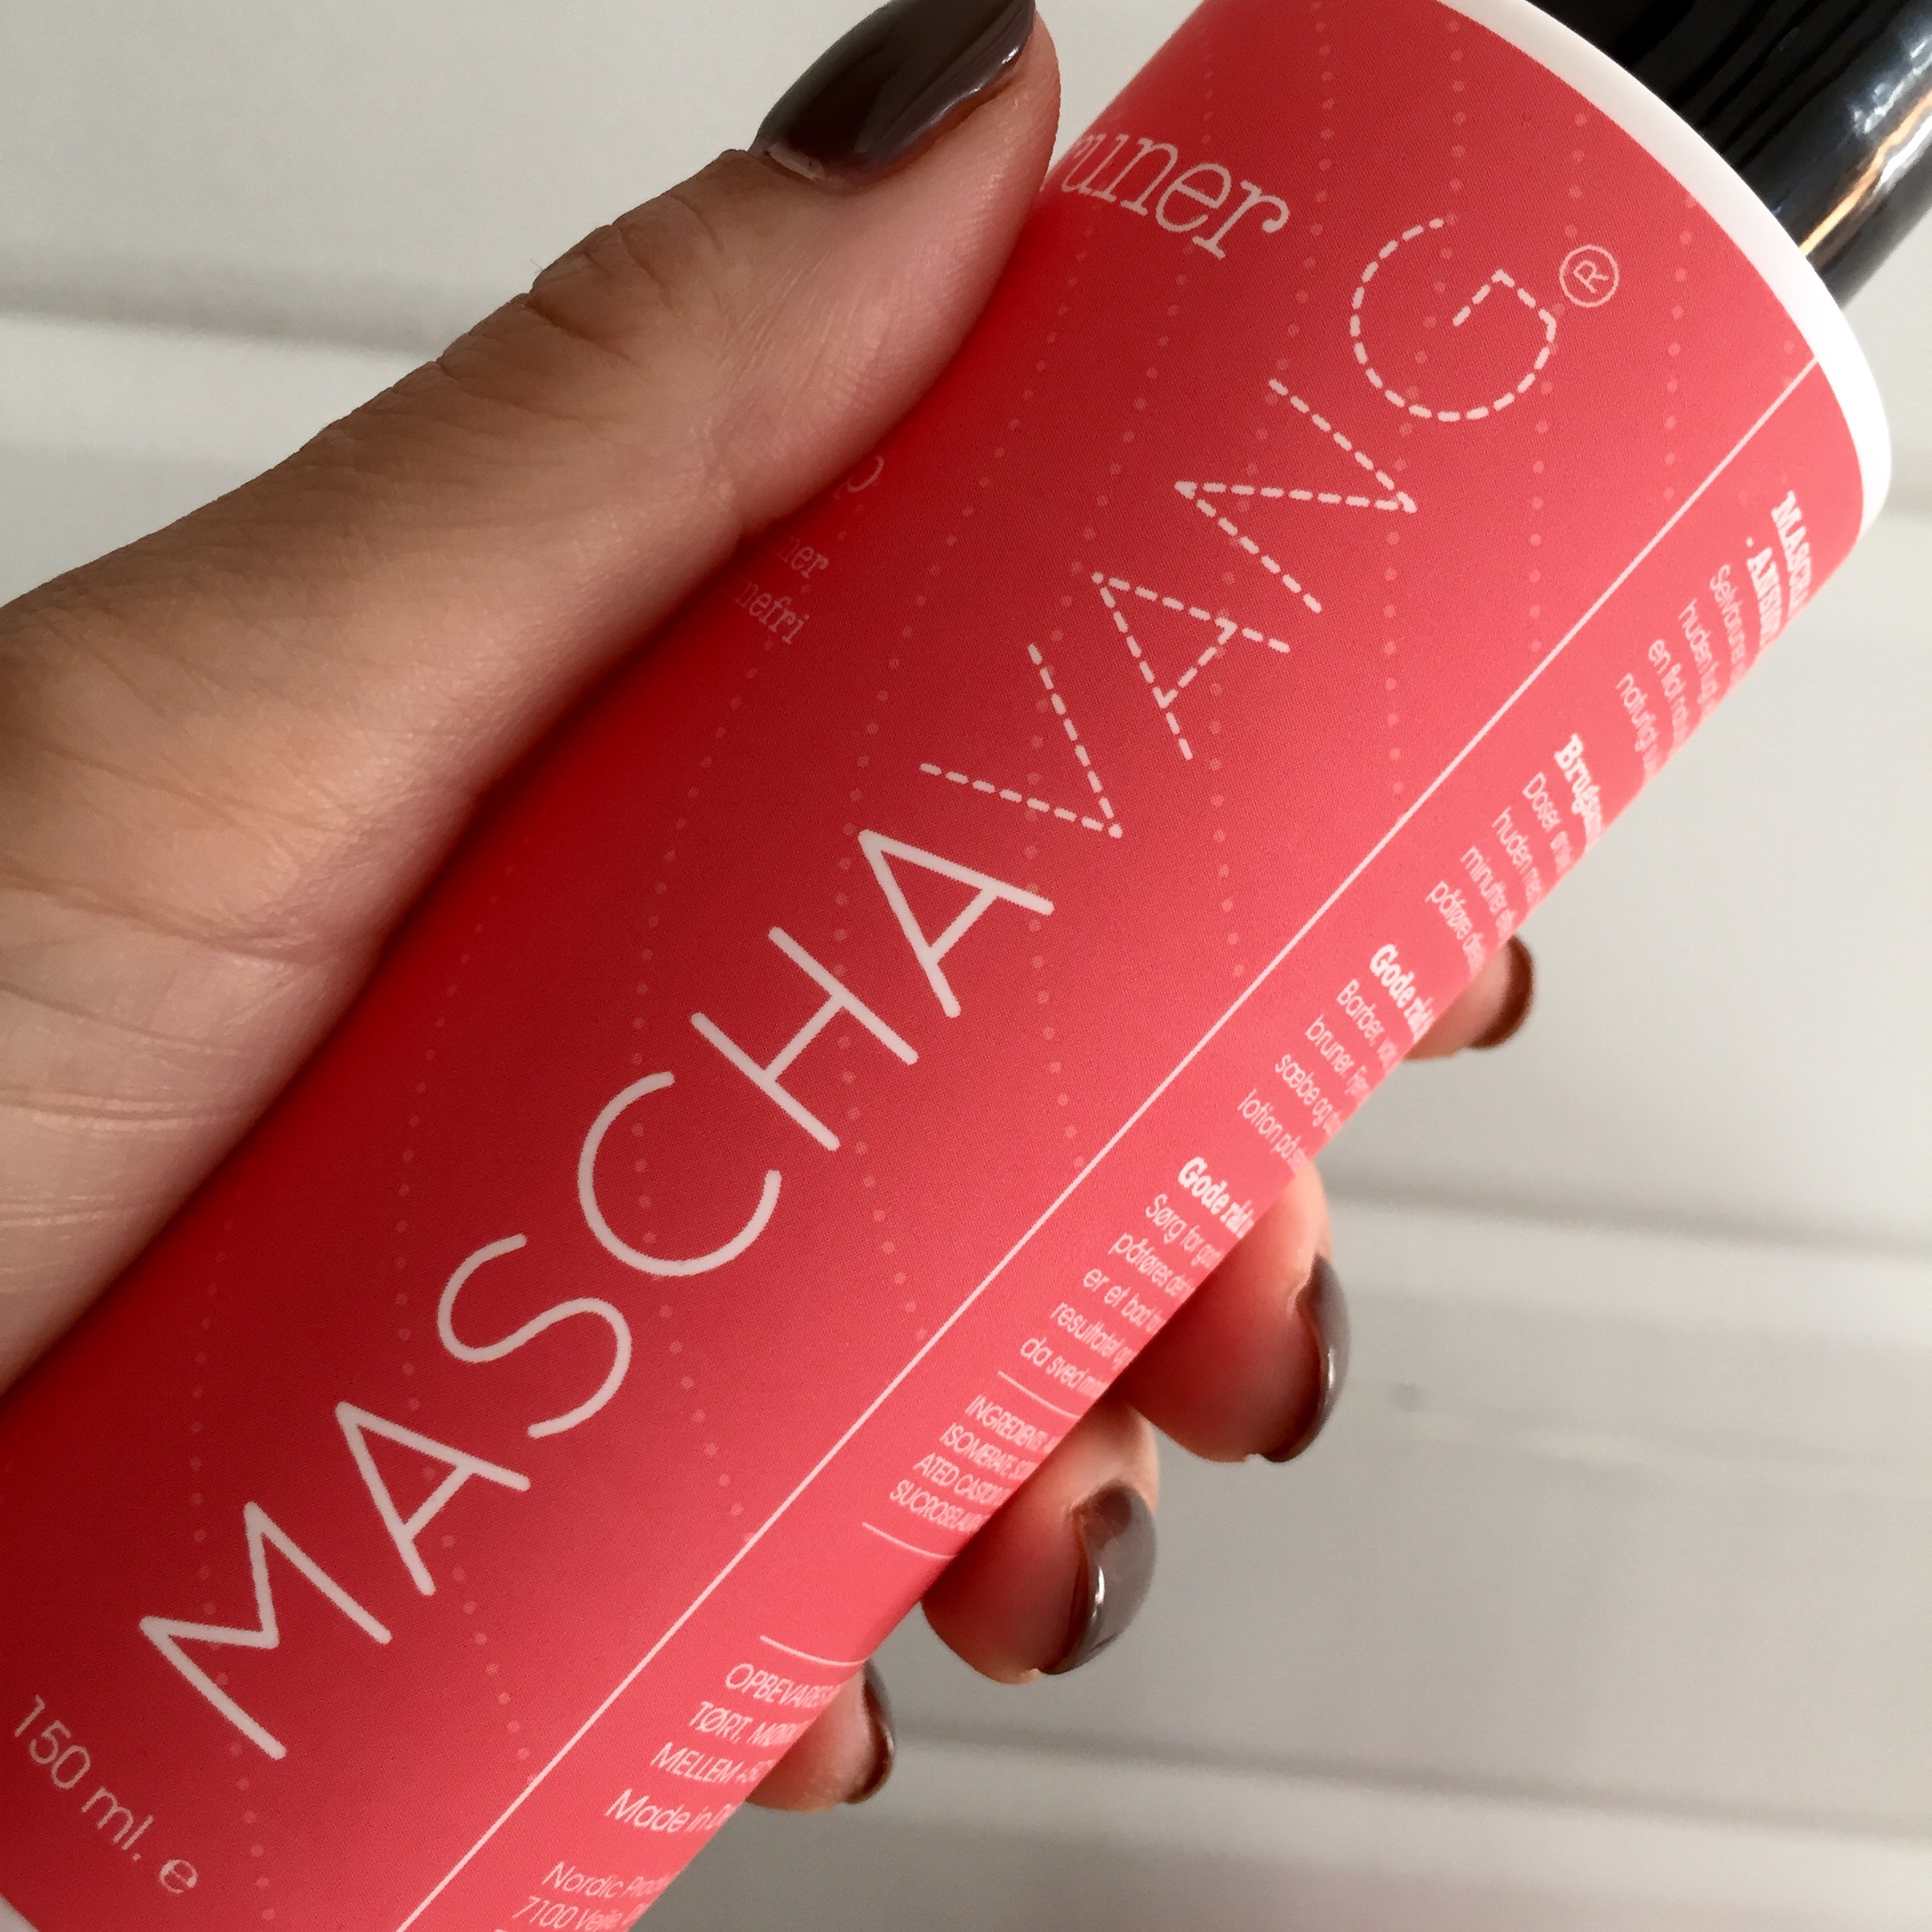 båd Sodavand FALSK NYT: MASCHA VANG selvbrunerserie | Daglig Blog | Mascha Vang